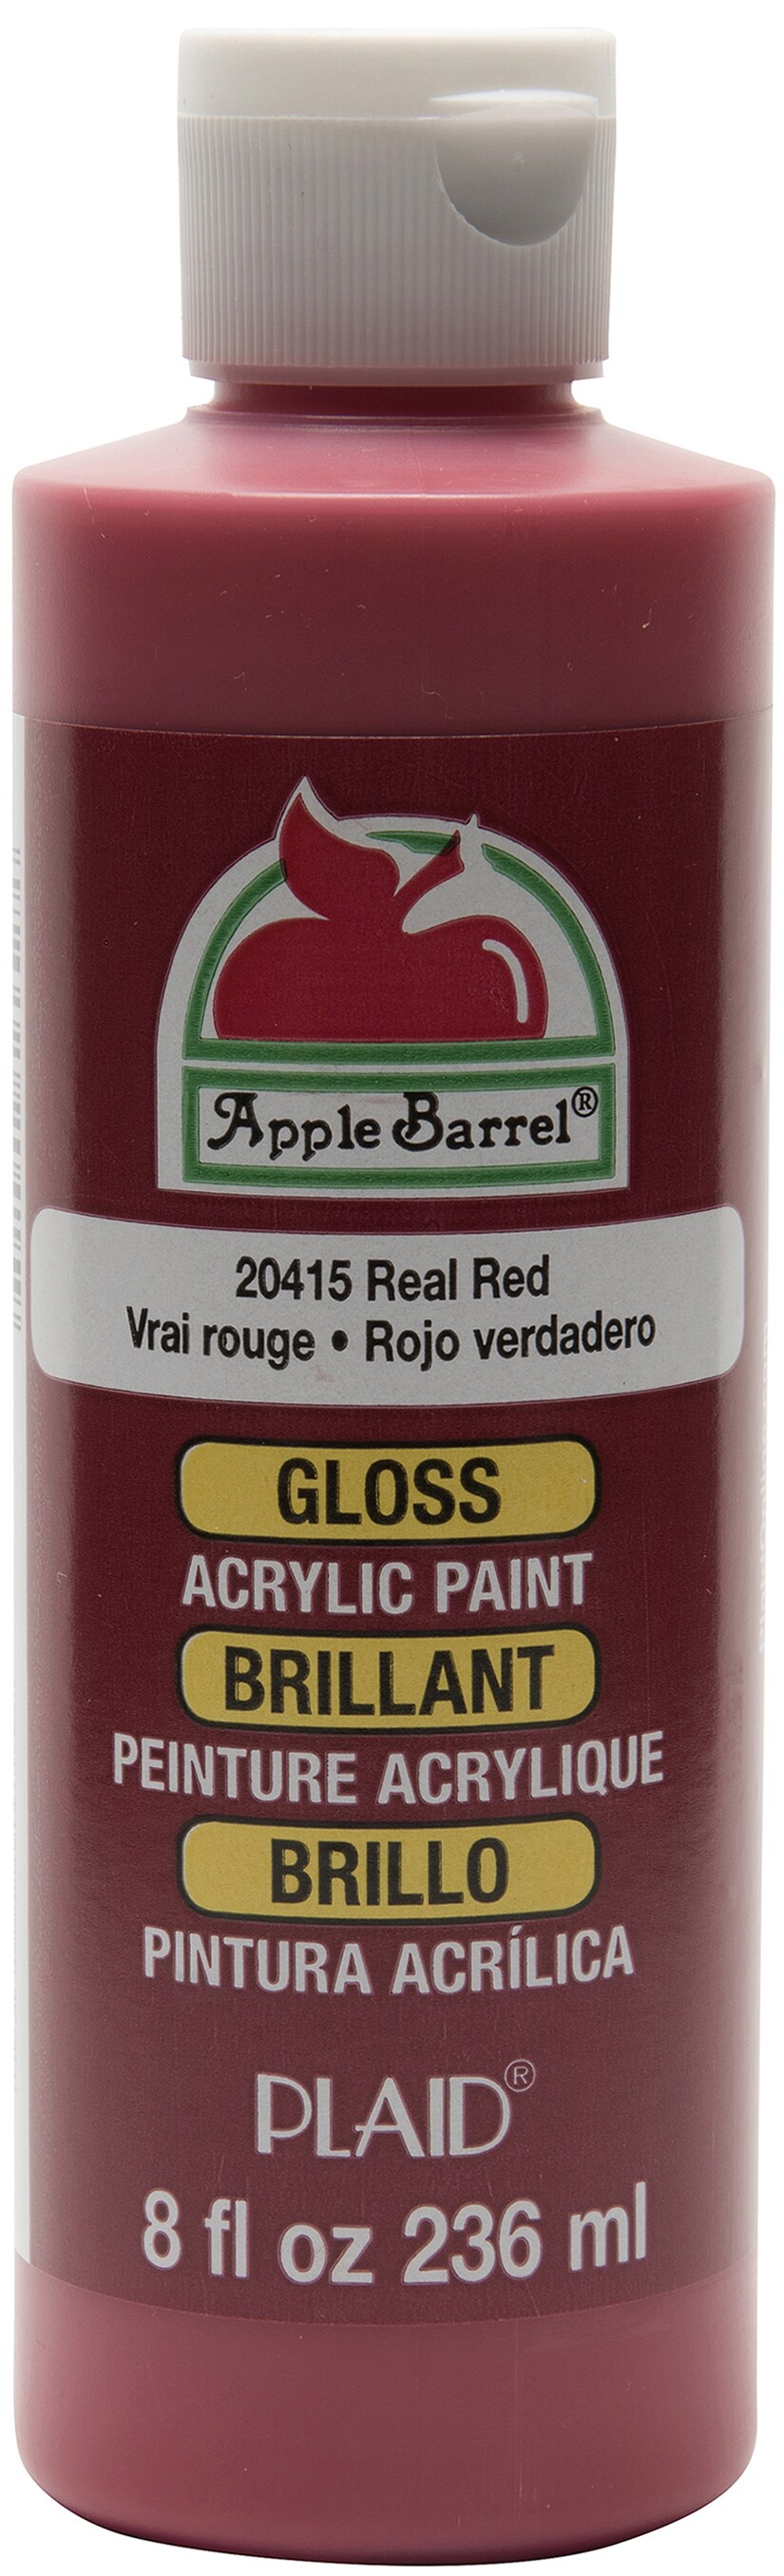 Apple Barrel Gloss Acrylic Paint 8oz-Real Blue, 1 count - Gerbes